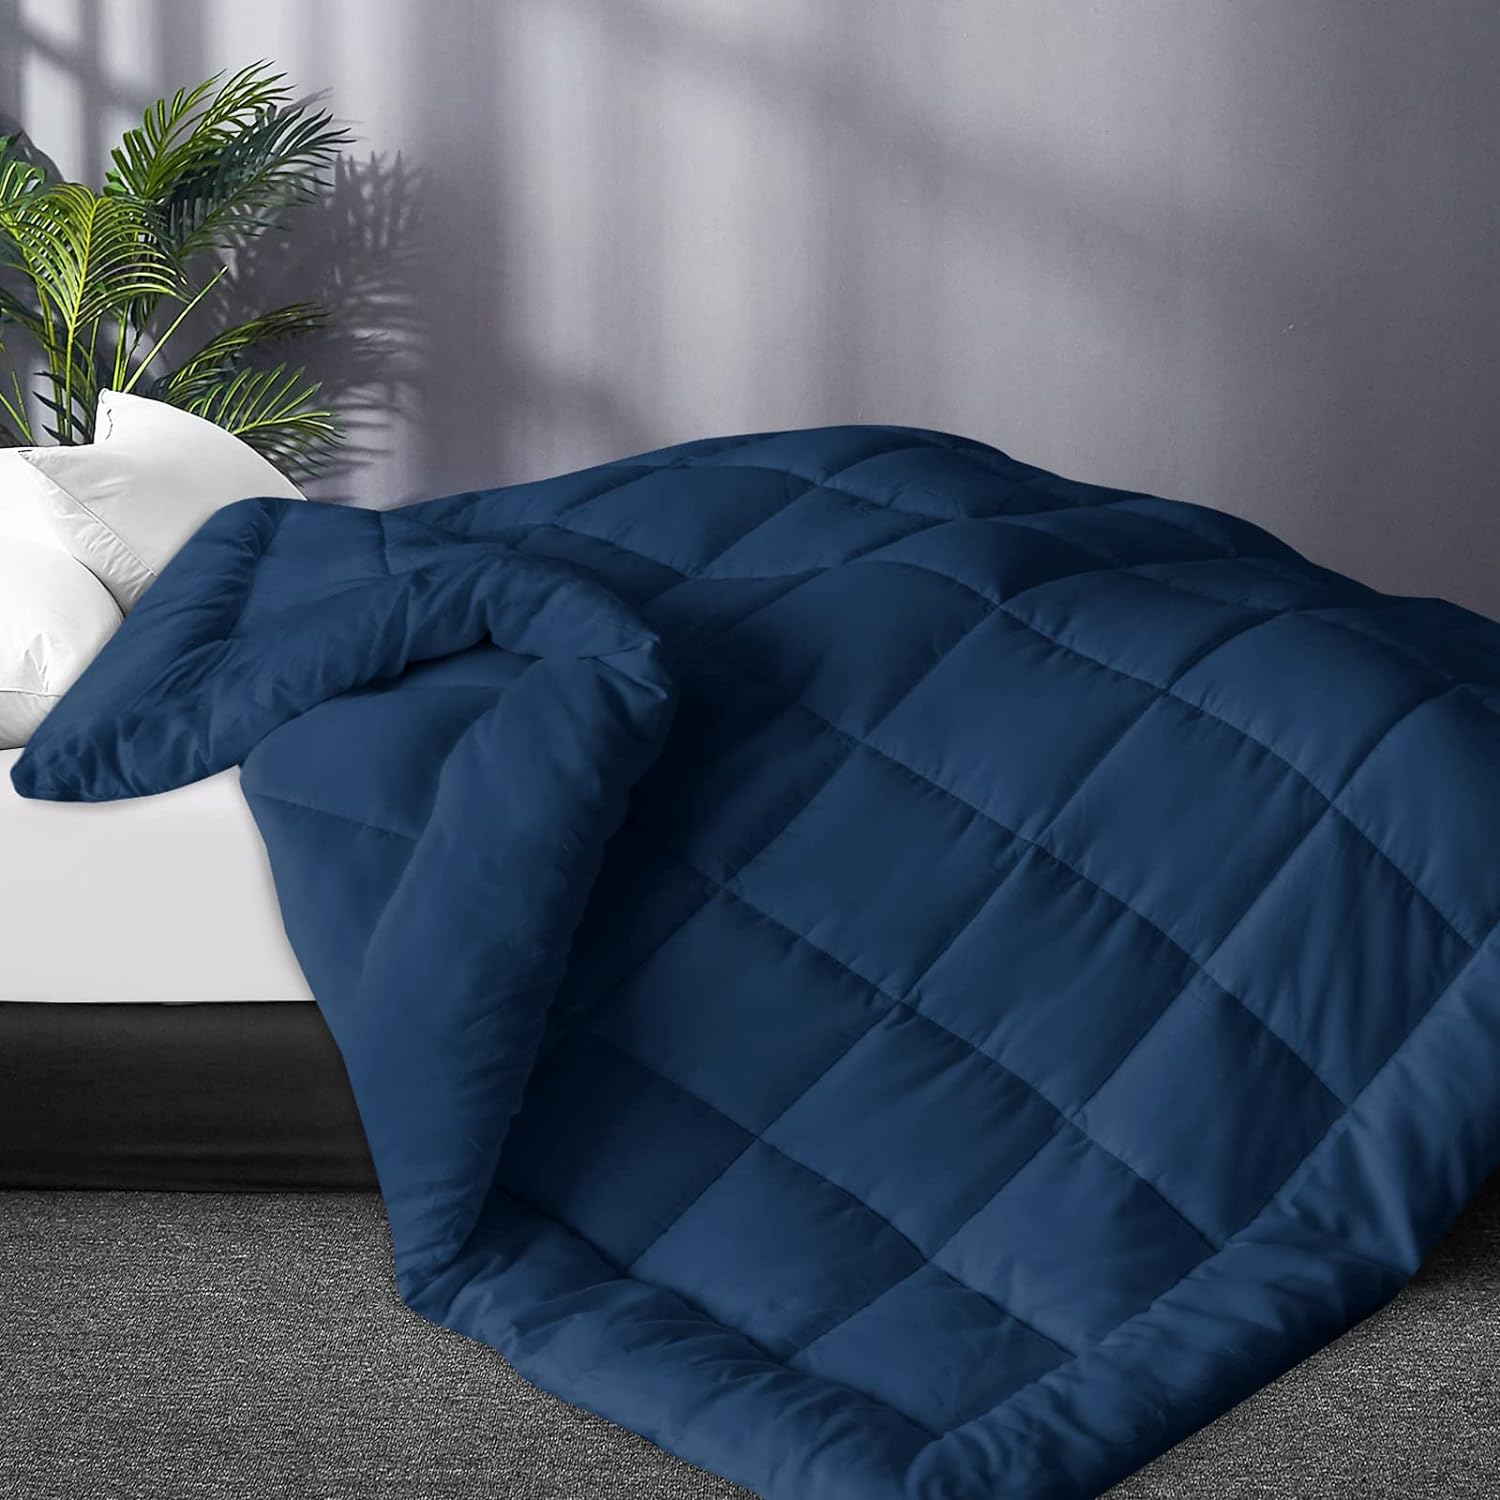 Alternative Comforter, Quilted Comforter with Corner Tab, All Season, Lightweight Medium Warmth, Plush Siliconized Fiber Filling, Navy-Moonsea Bedding 